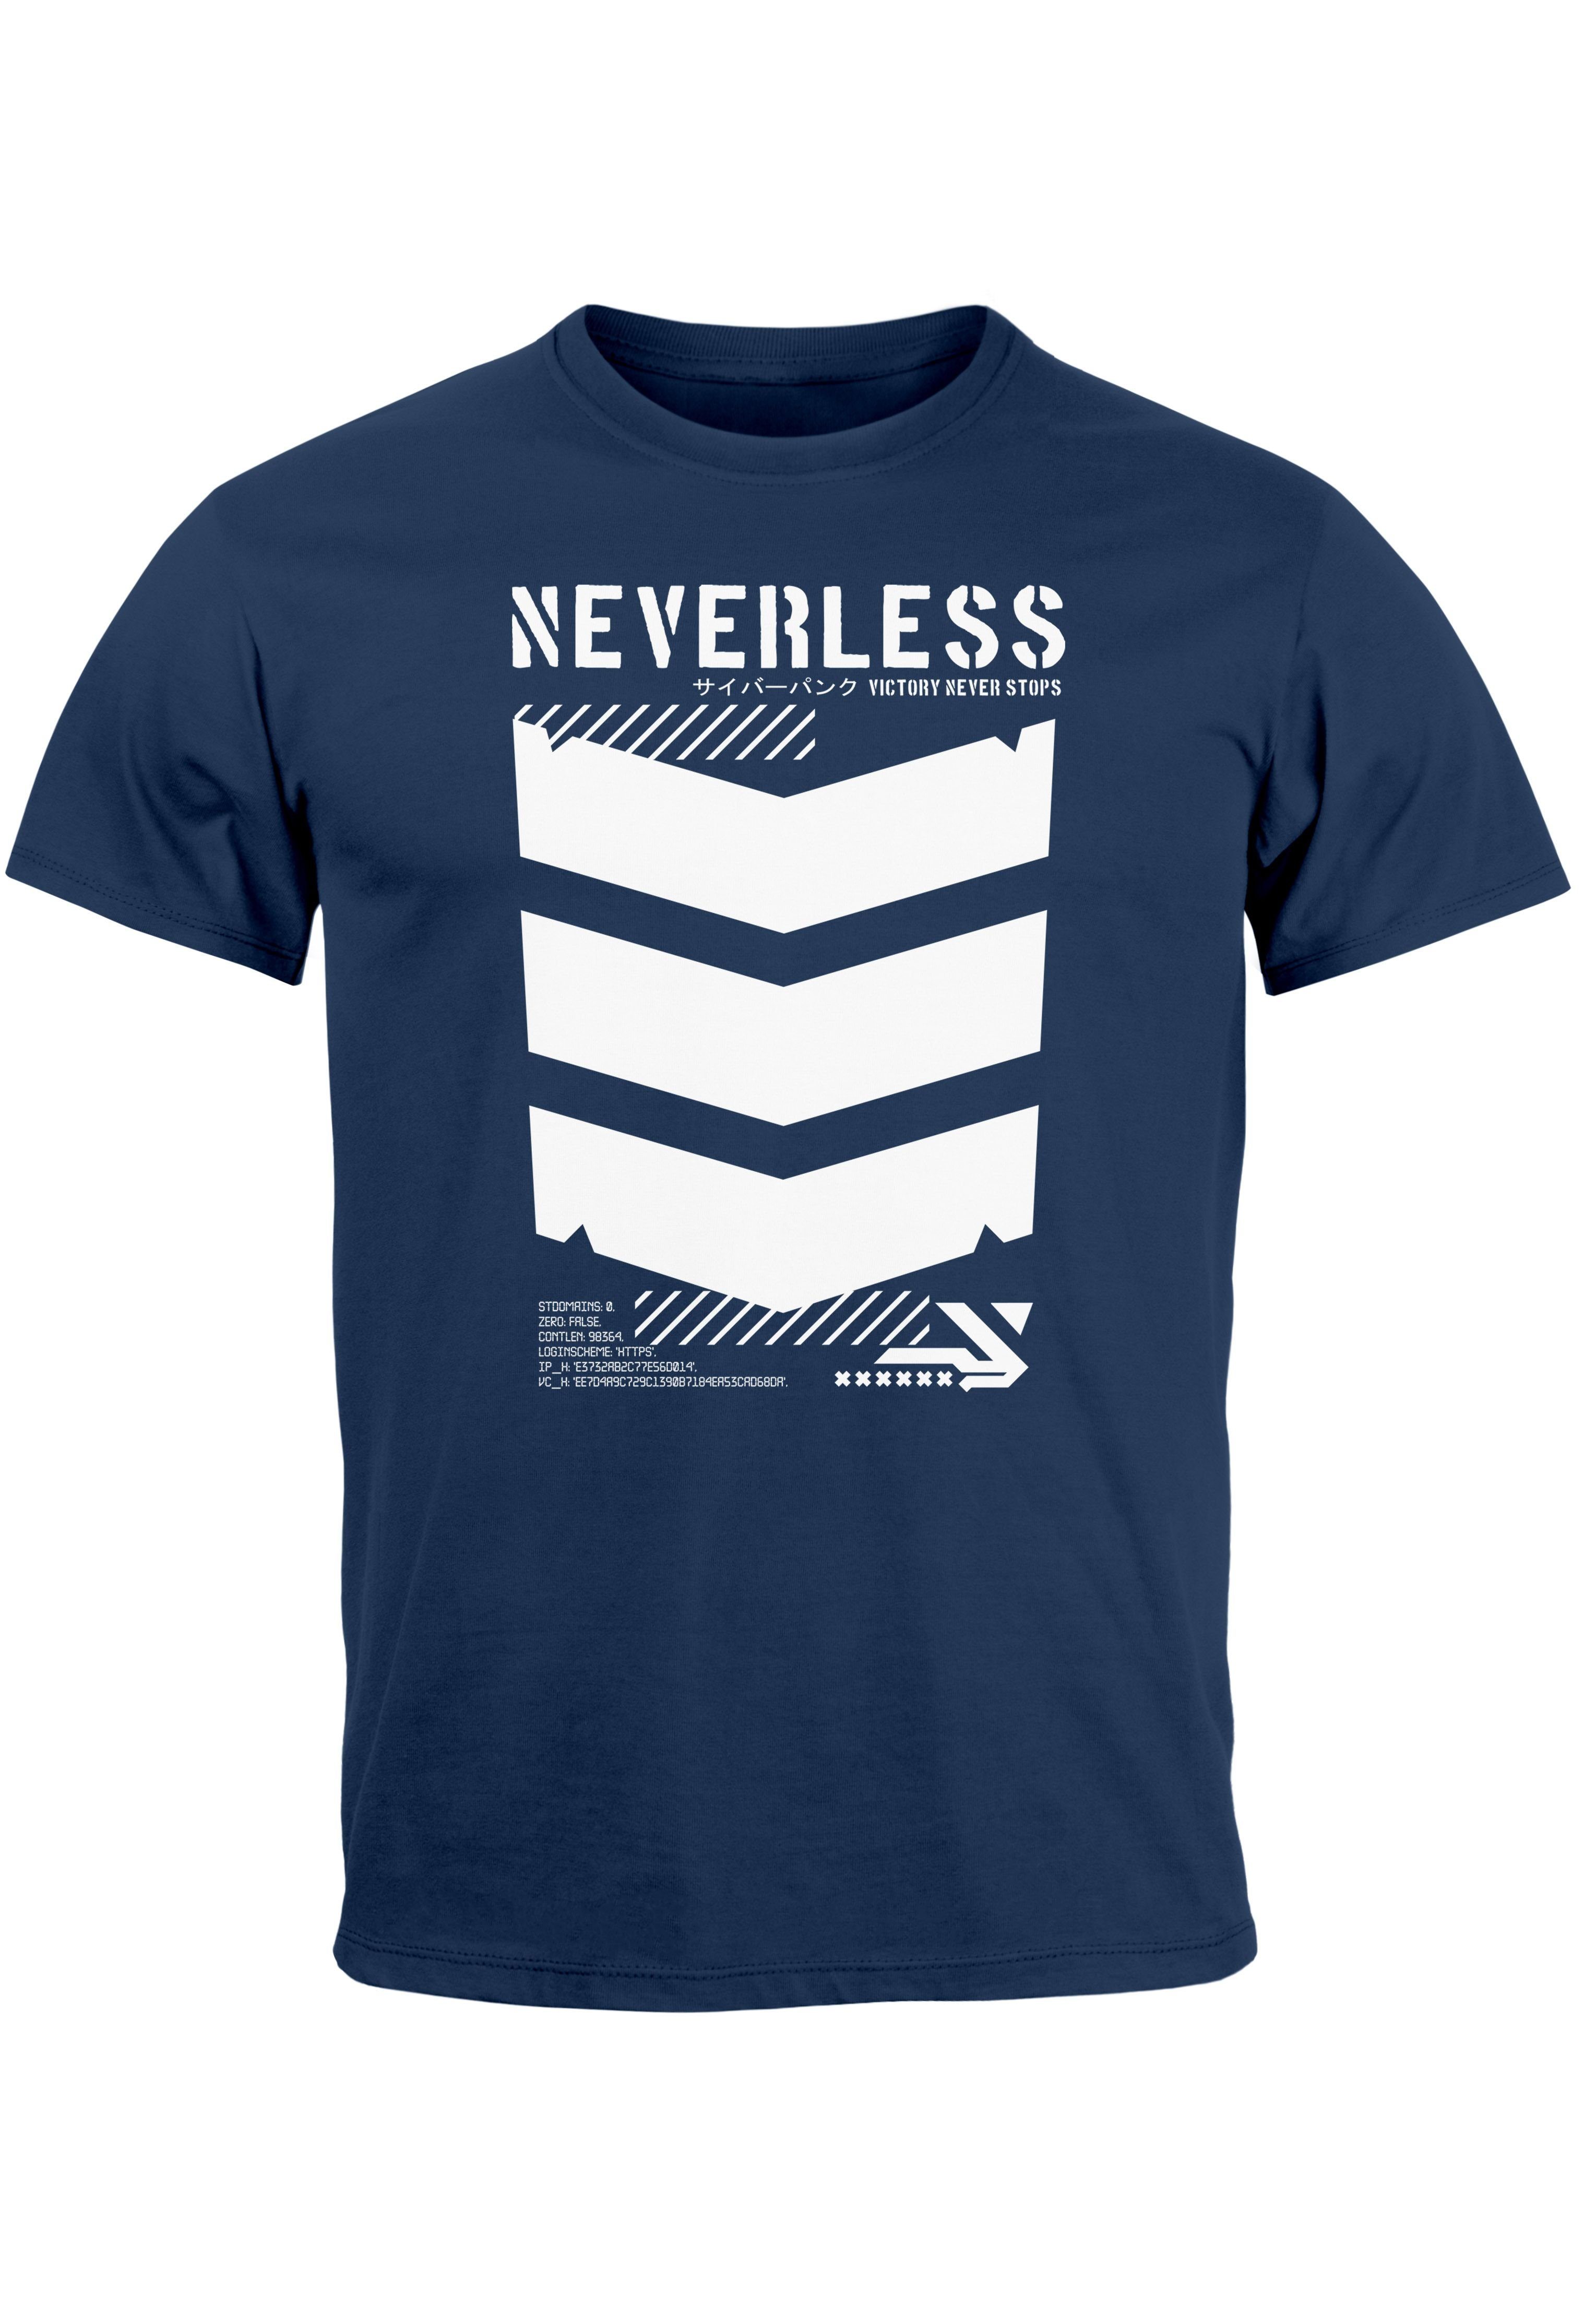 Neverless Print-Shirt Herren T-Shirt Techwear Trend Motive Japanese Streetstyle Military Fas mit Print navy